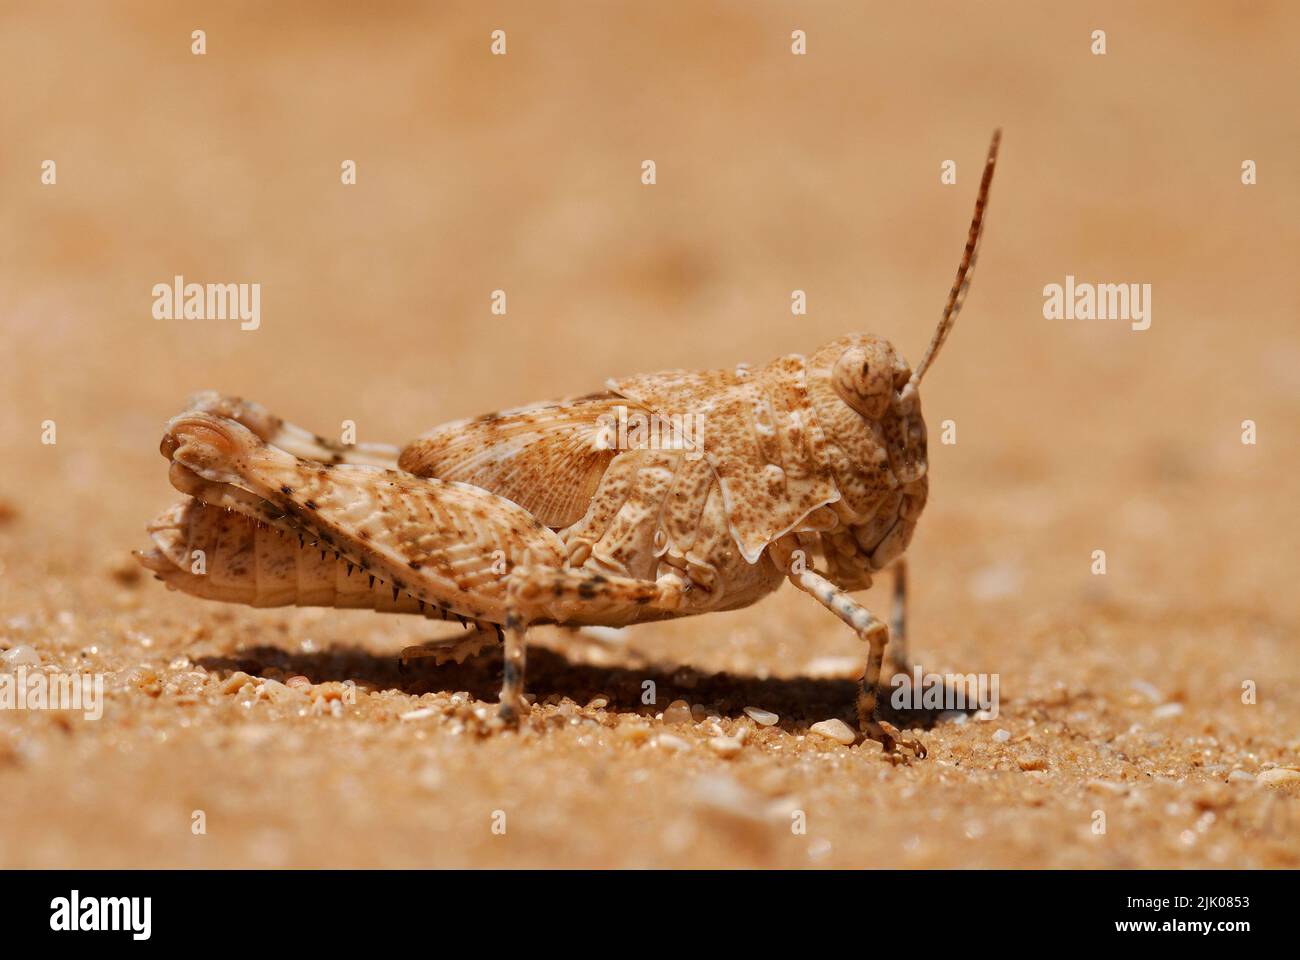 Grasshopper camouflage on sand Stock Photo